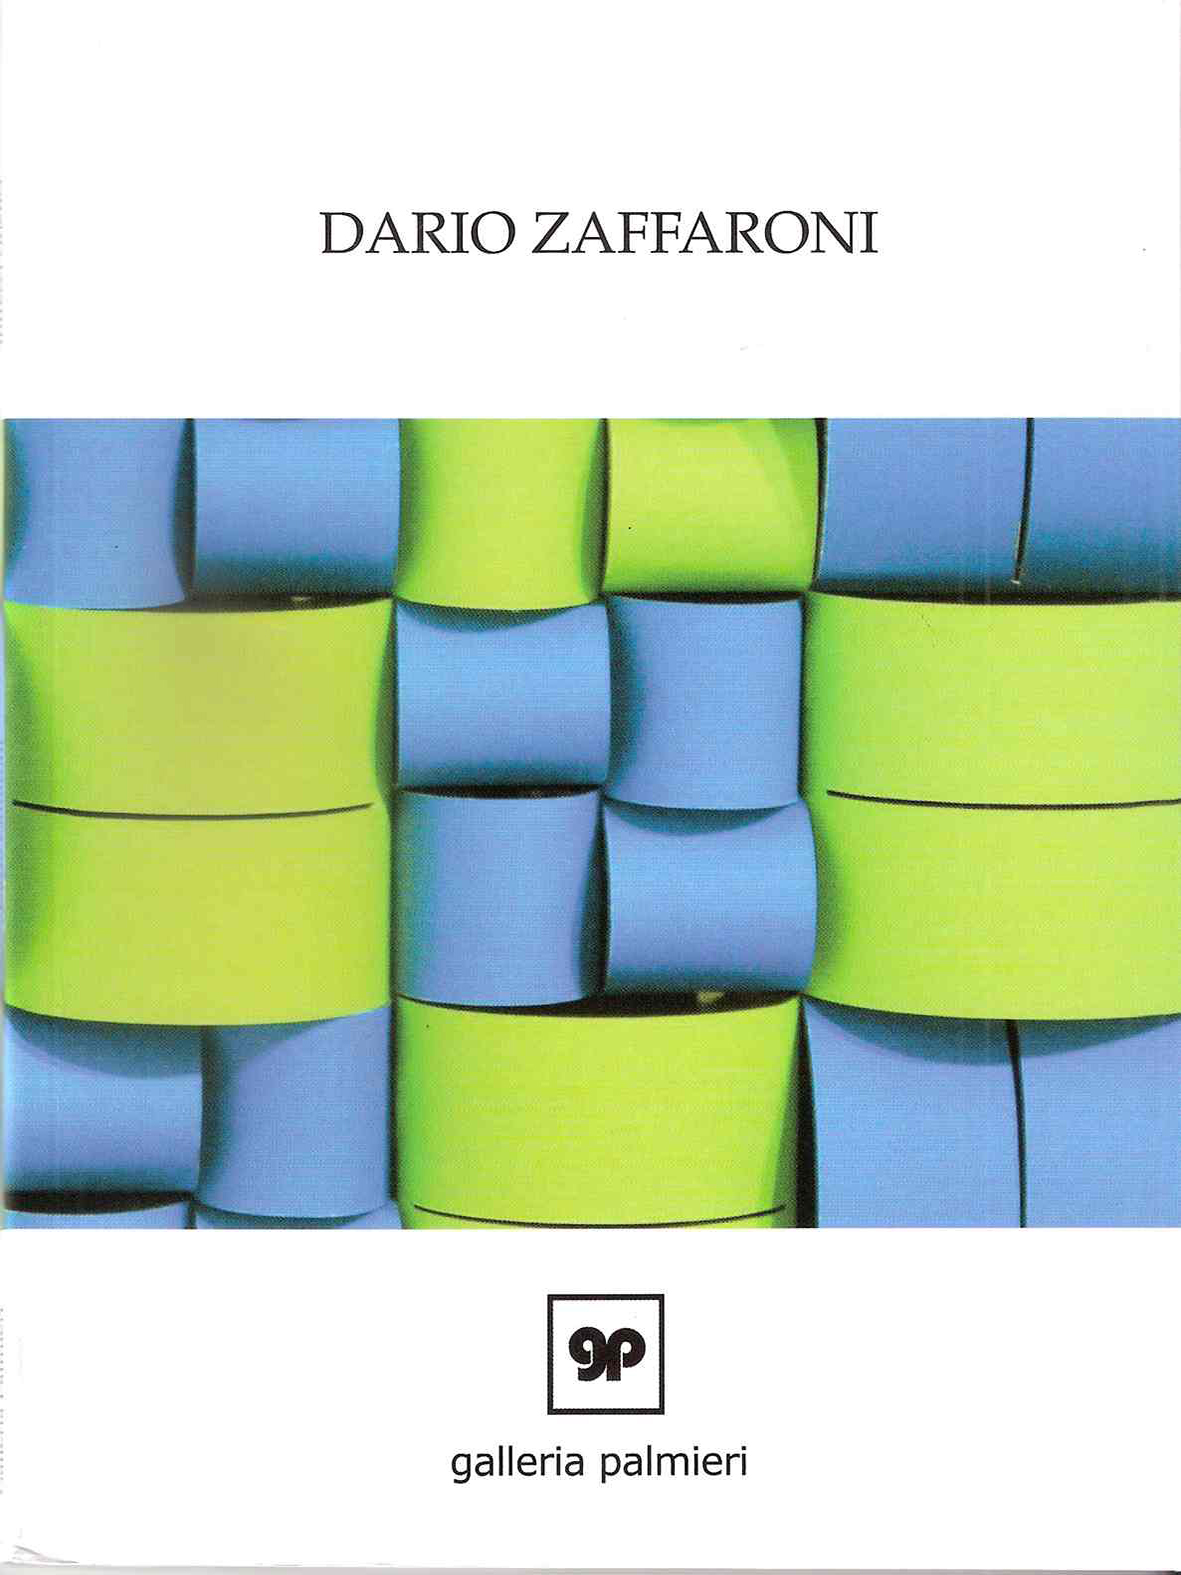 Dario Zaffaroni